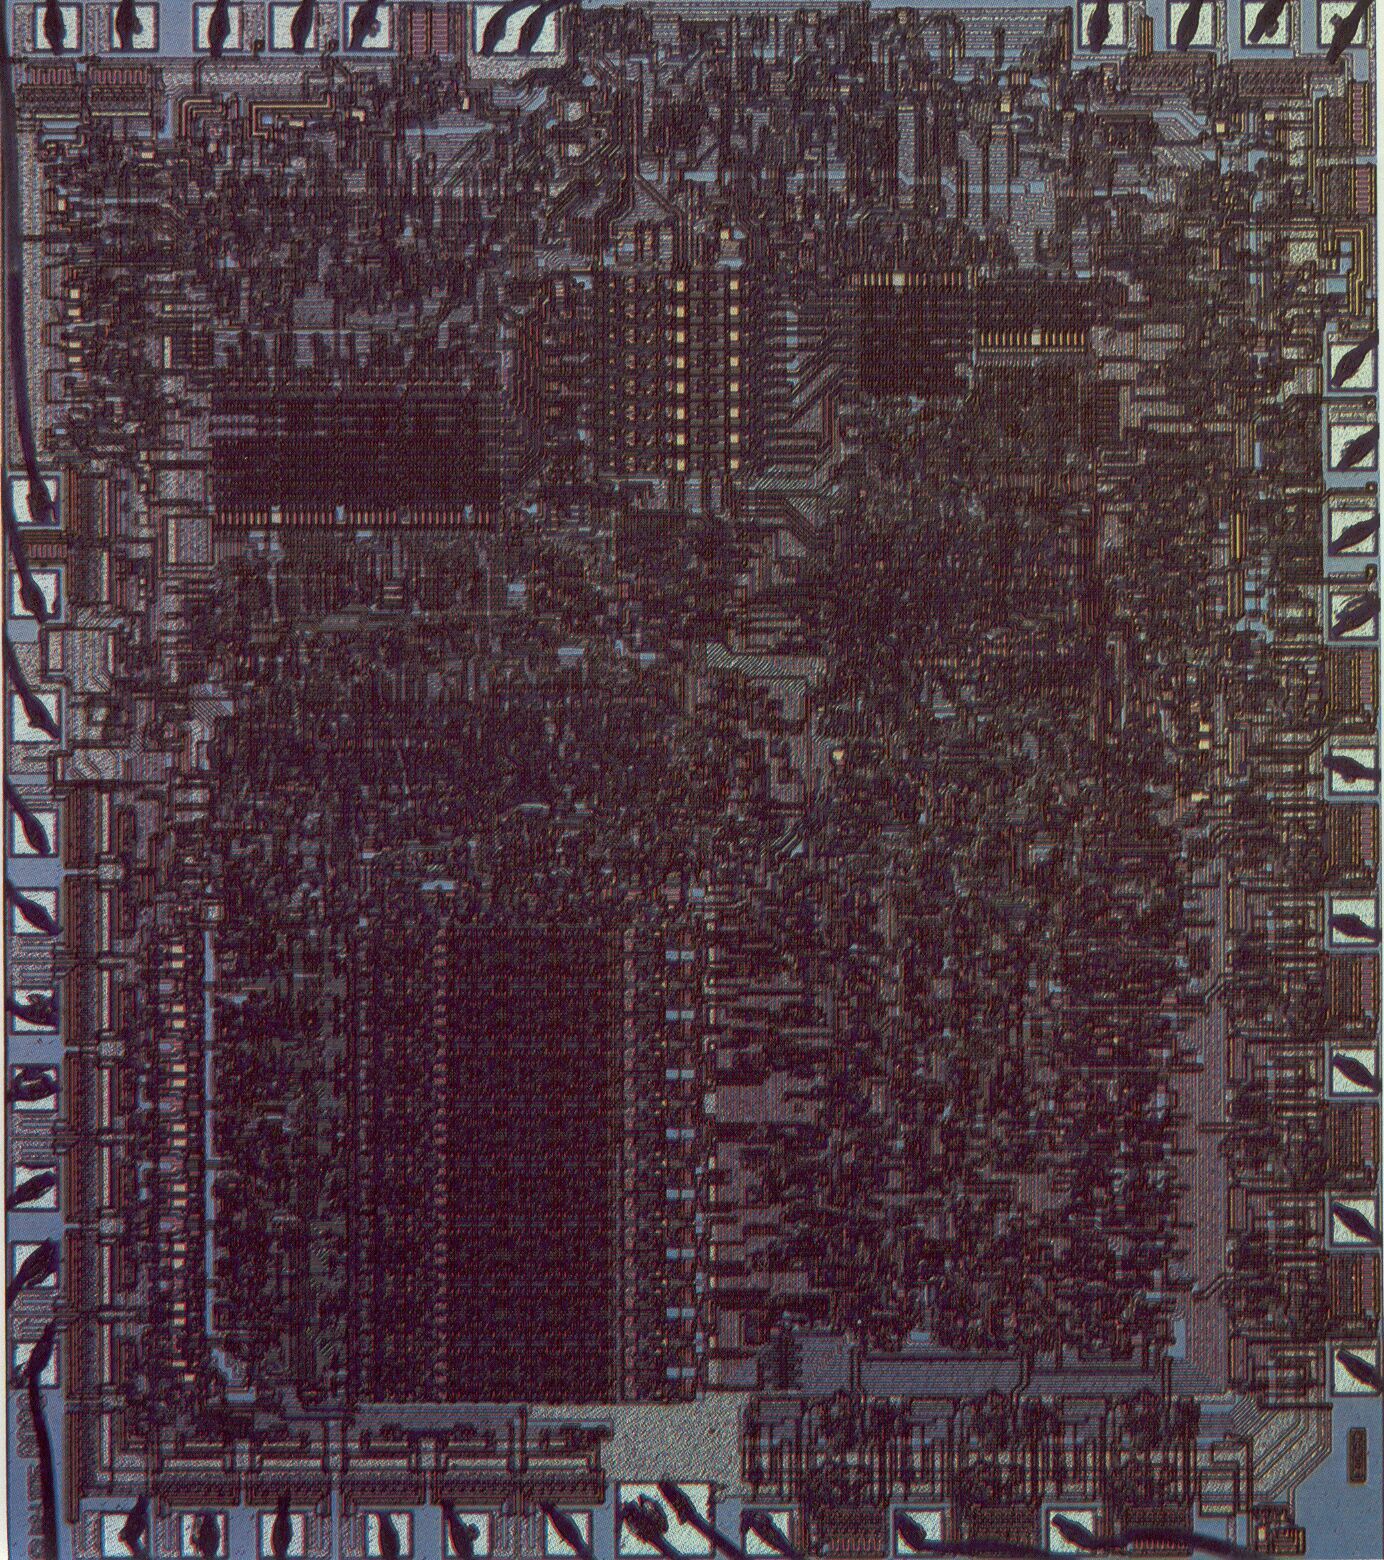 1PCS P8080A-1 VINTAGE  P8080A 8080 CPU MICROPROCESSOR#R2020 